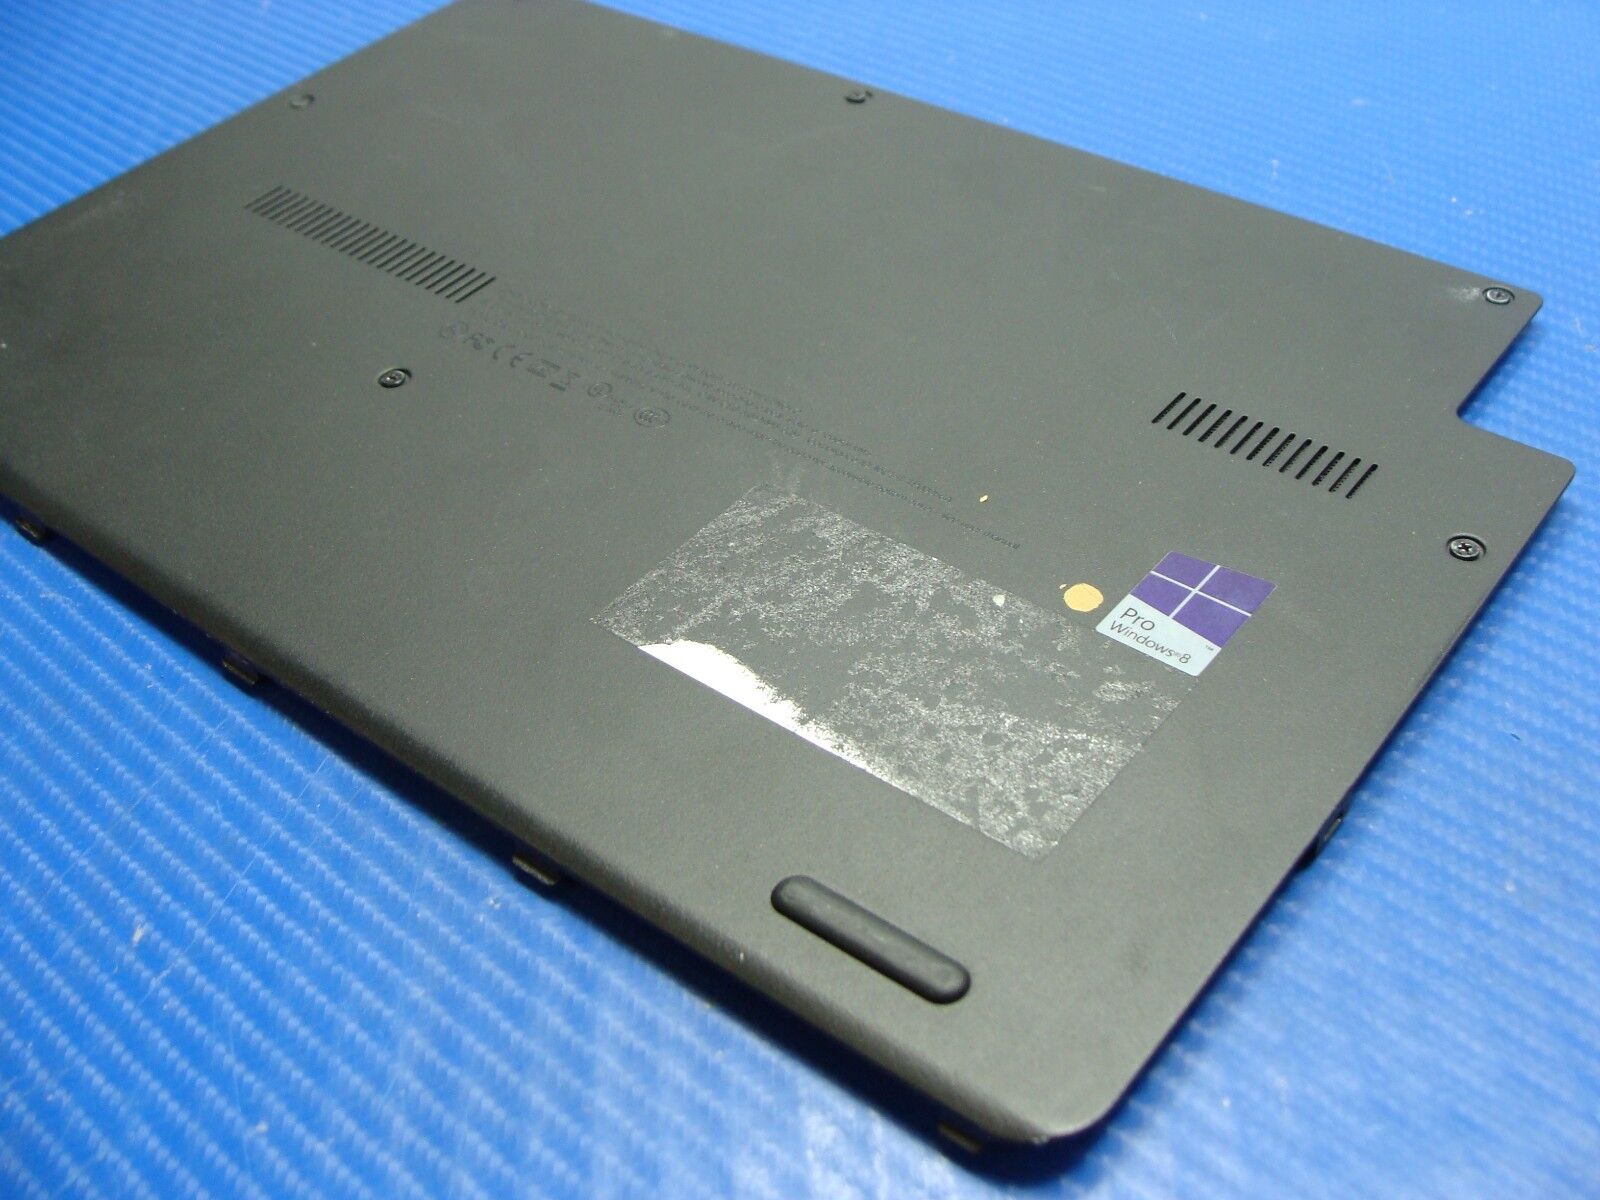 Lenovo ThinkPad Yoga 11e 11.6